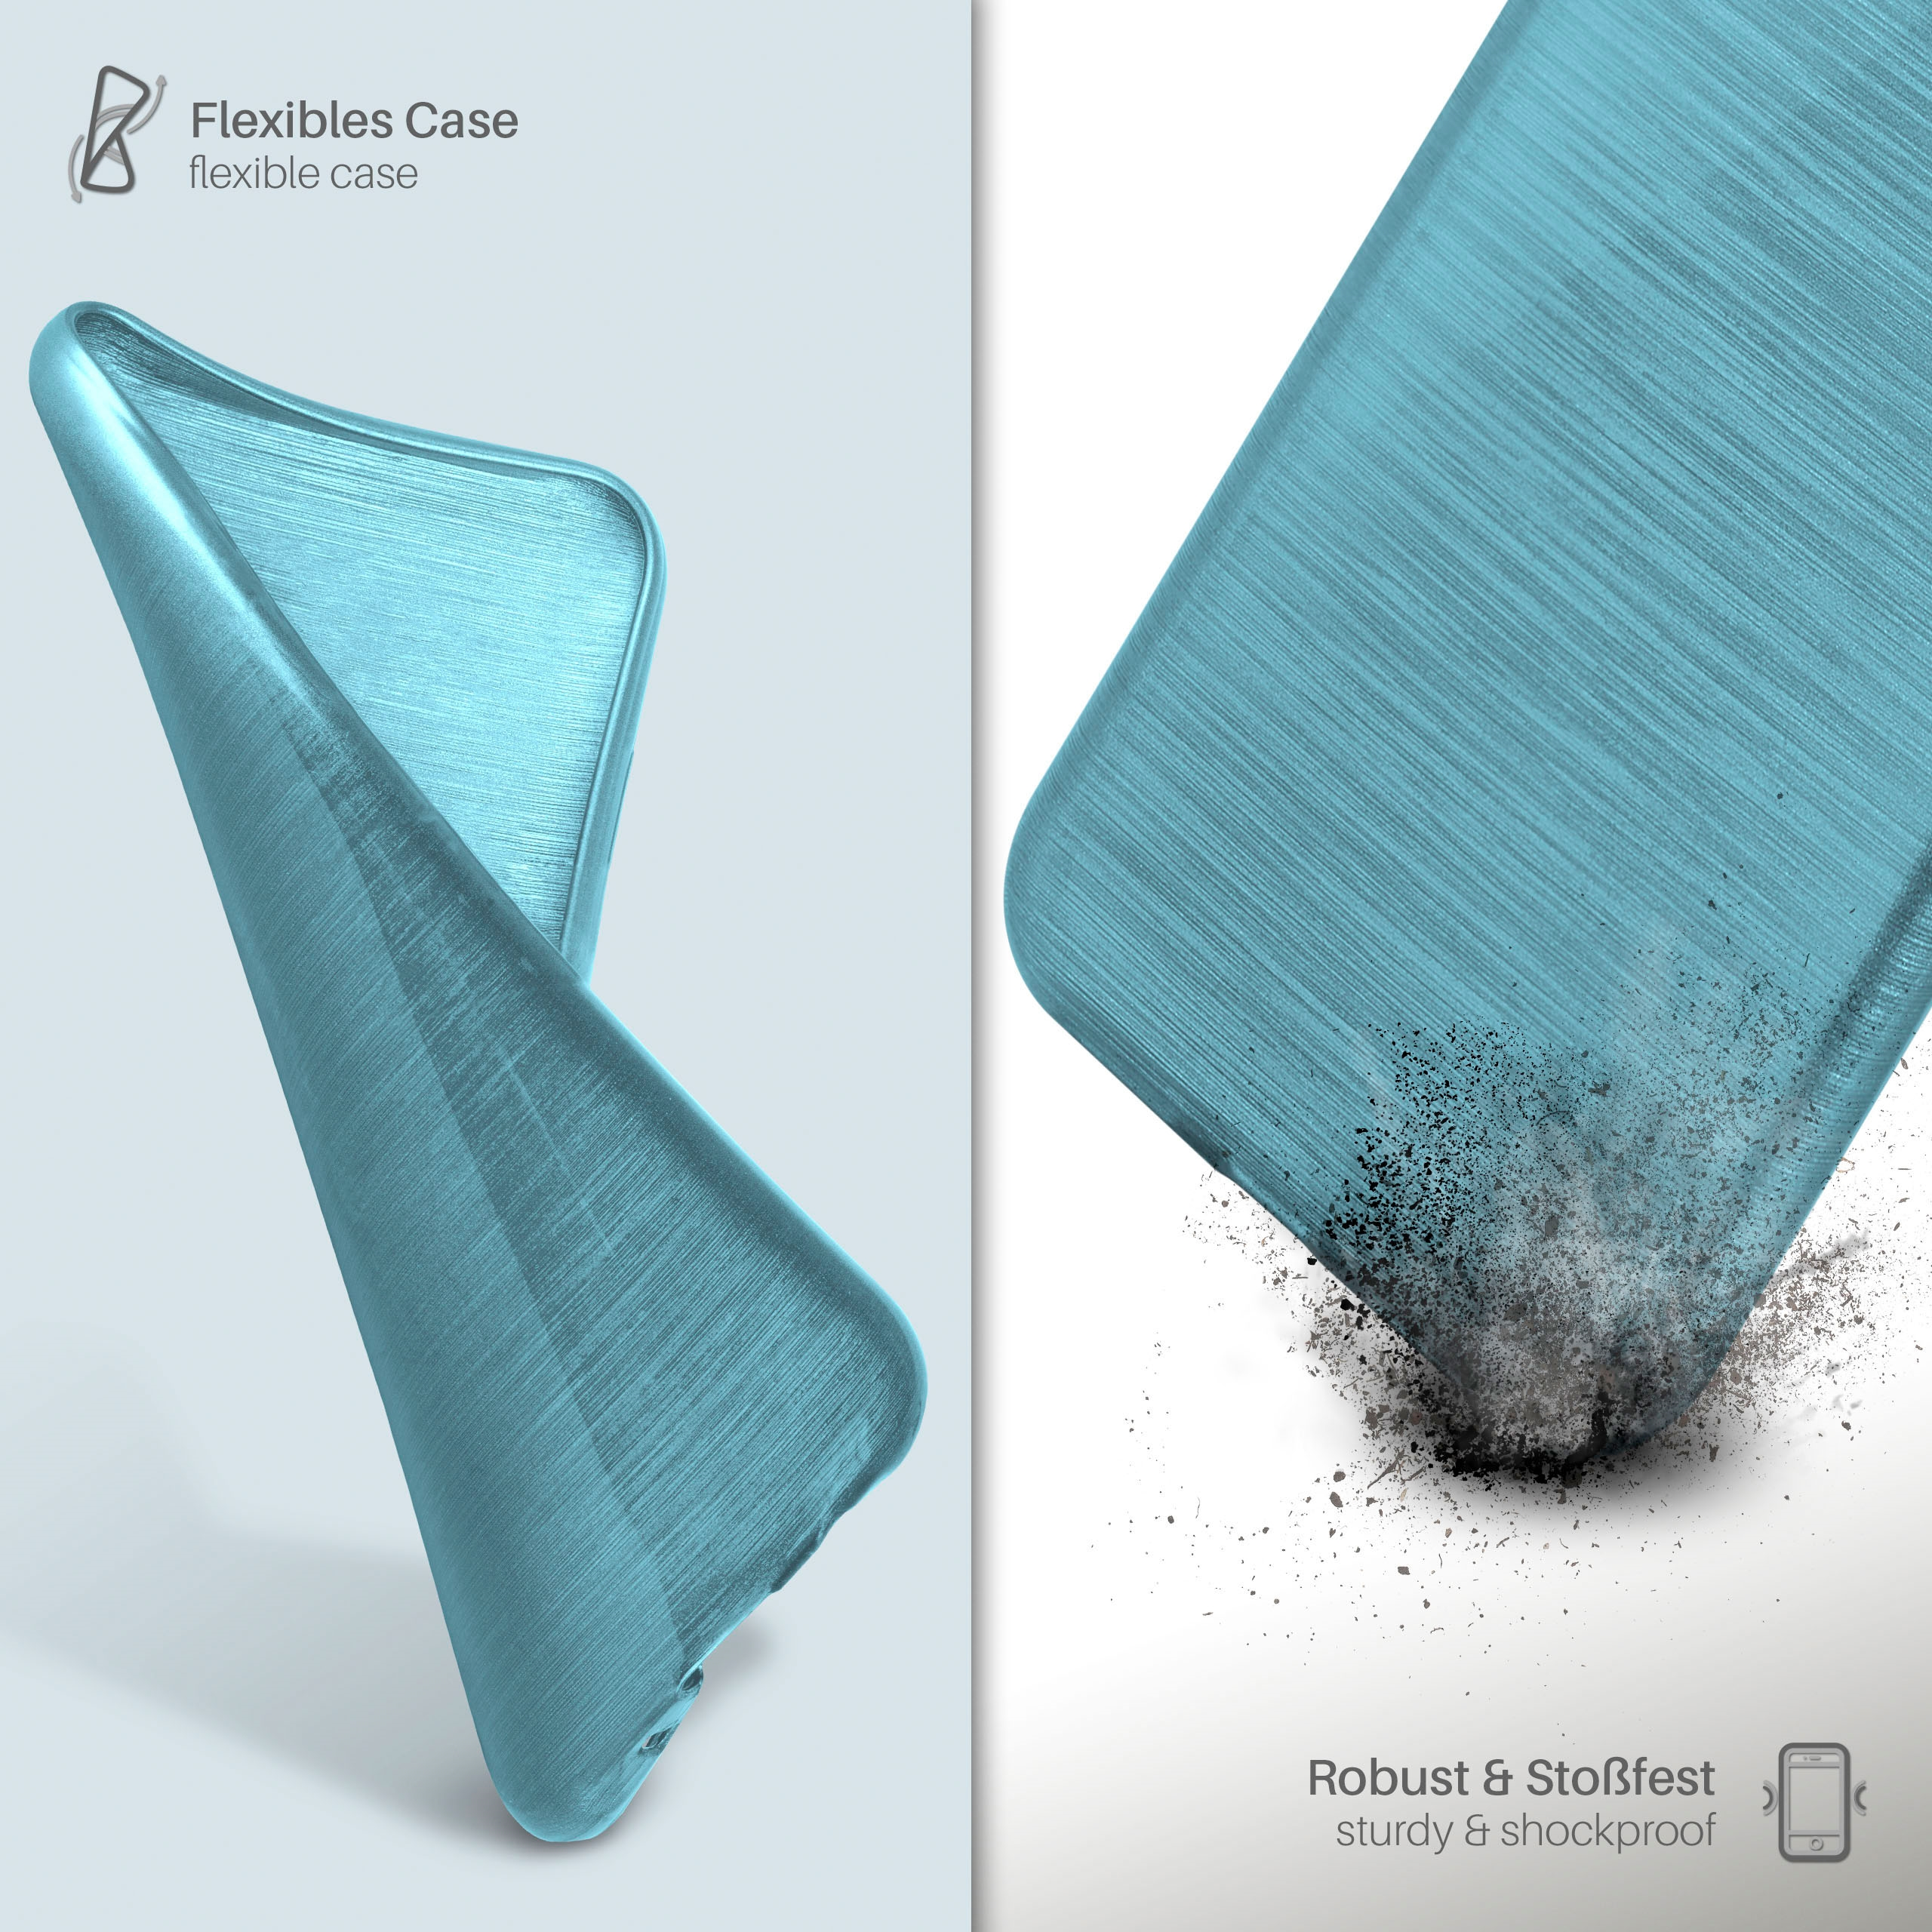 MOEX Brushed Aqua-Cyan Backcover, iPhone iPhone Apple, / Case, 6, 6s